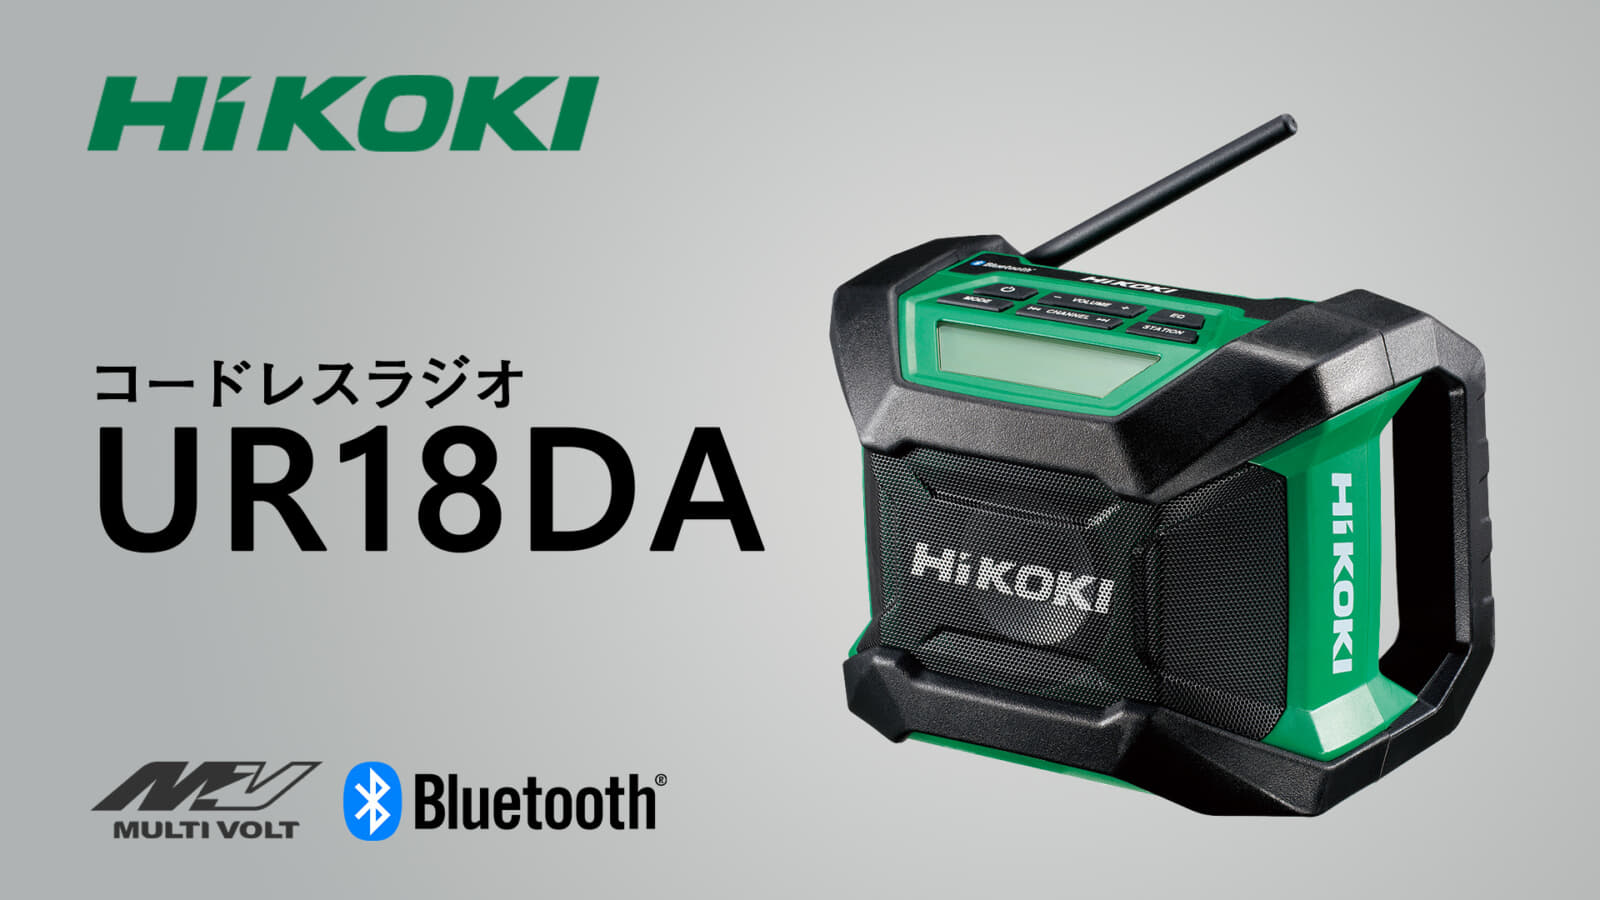 HiKOKI UR18DA コードレスラジオを発売、小型・軽量の省スペース 